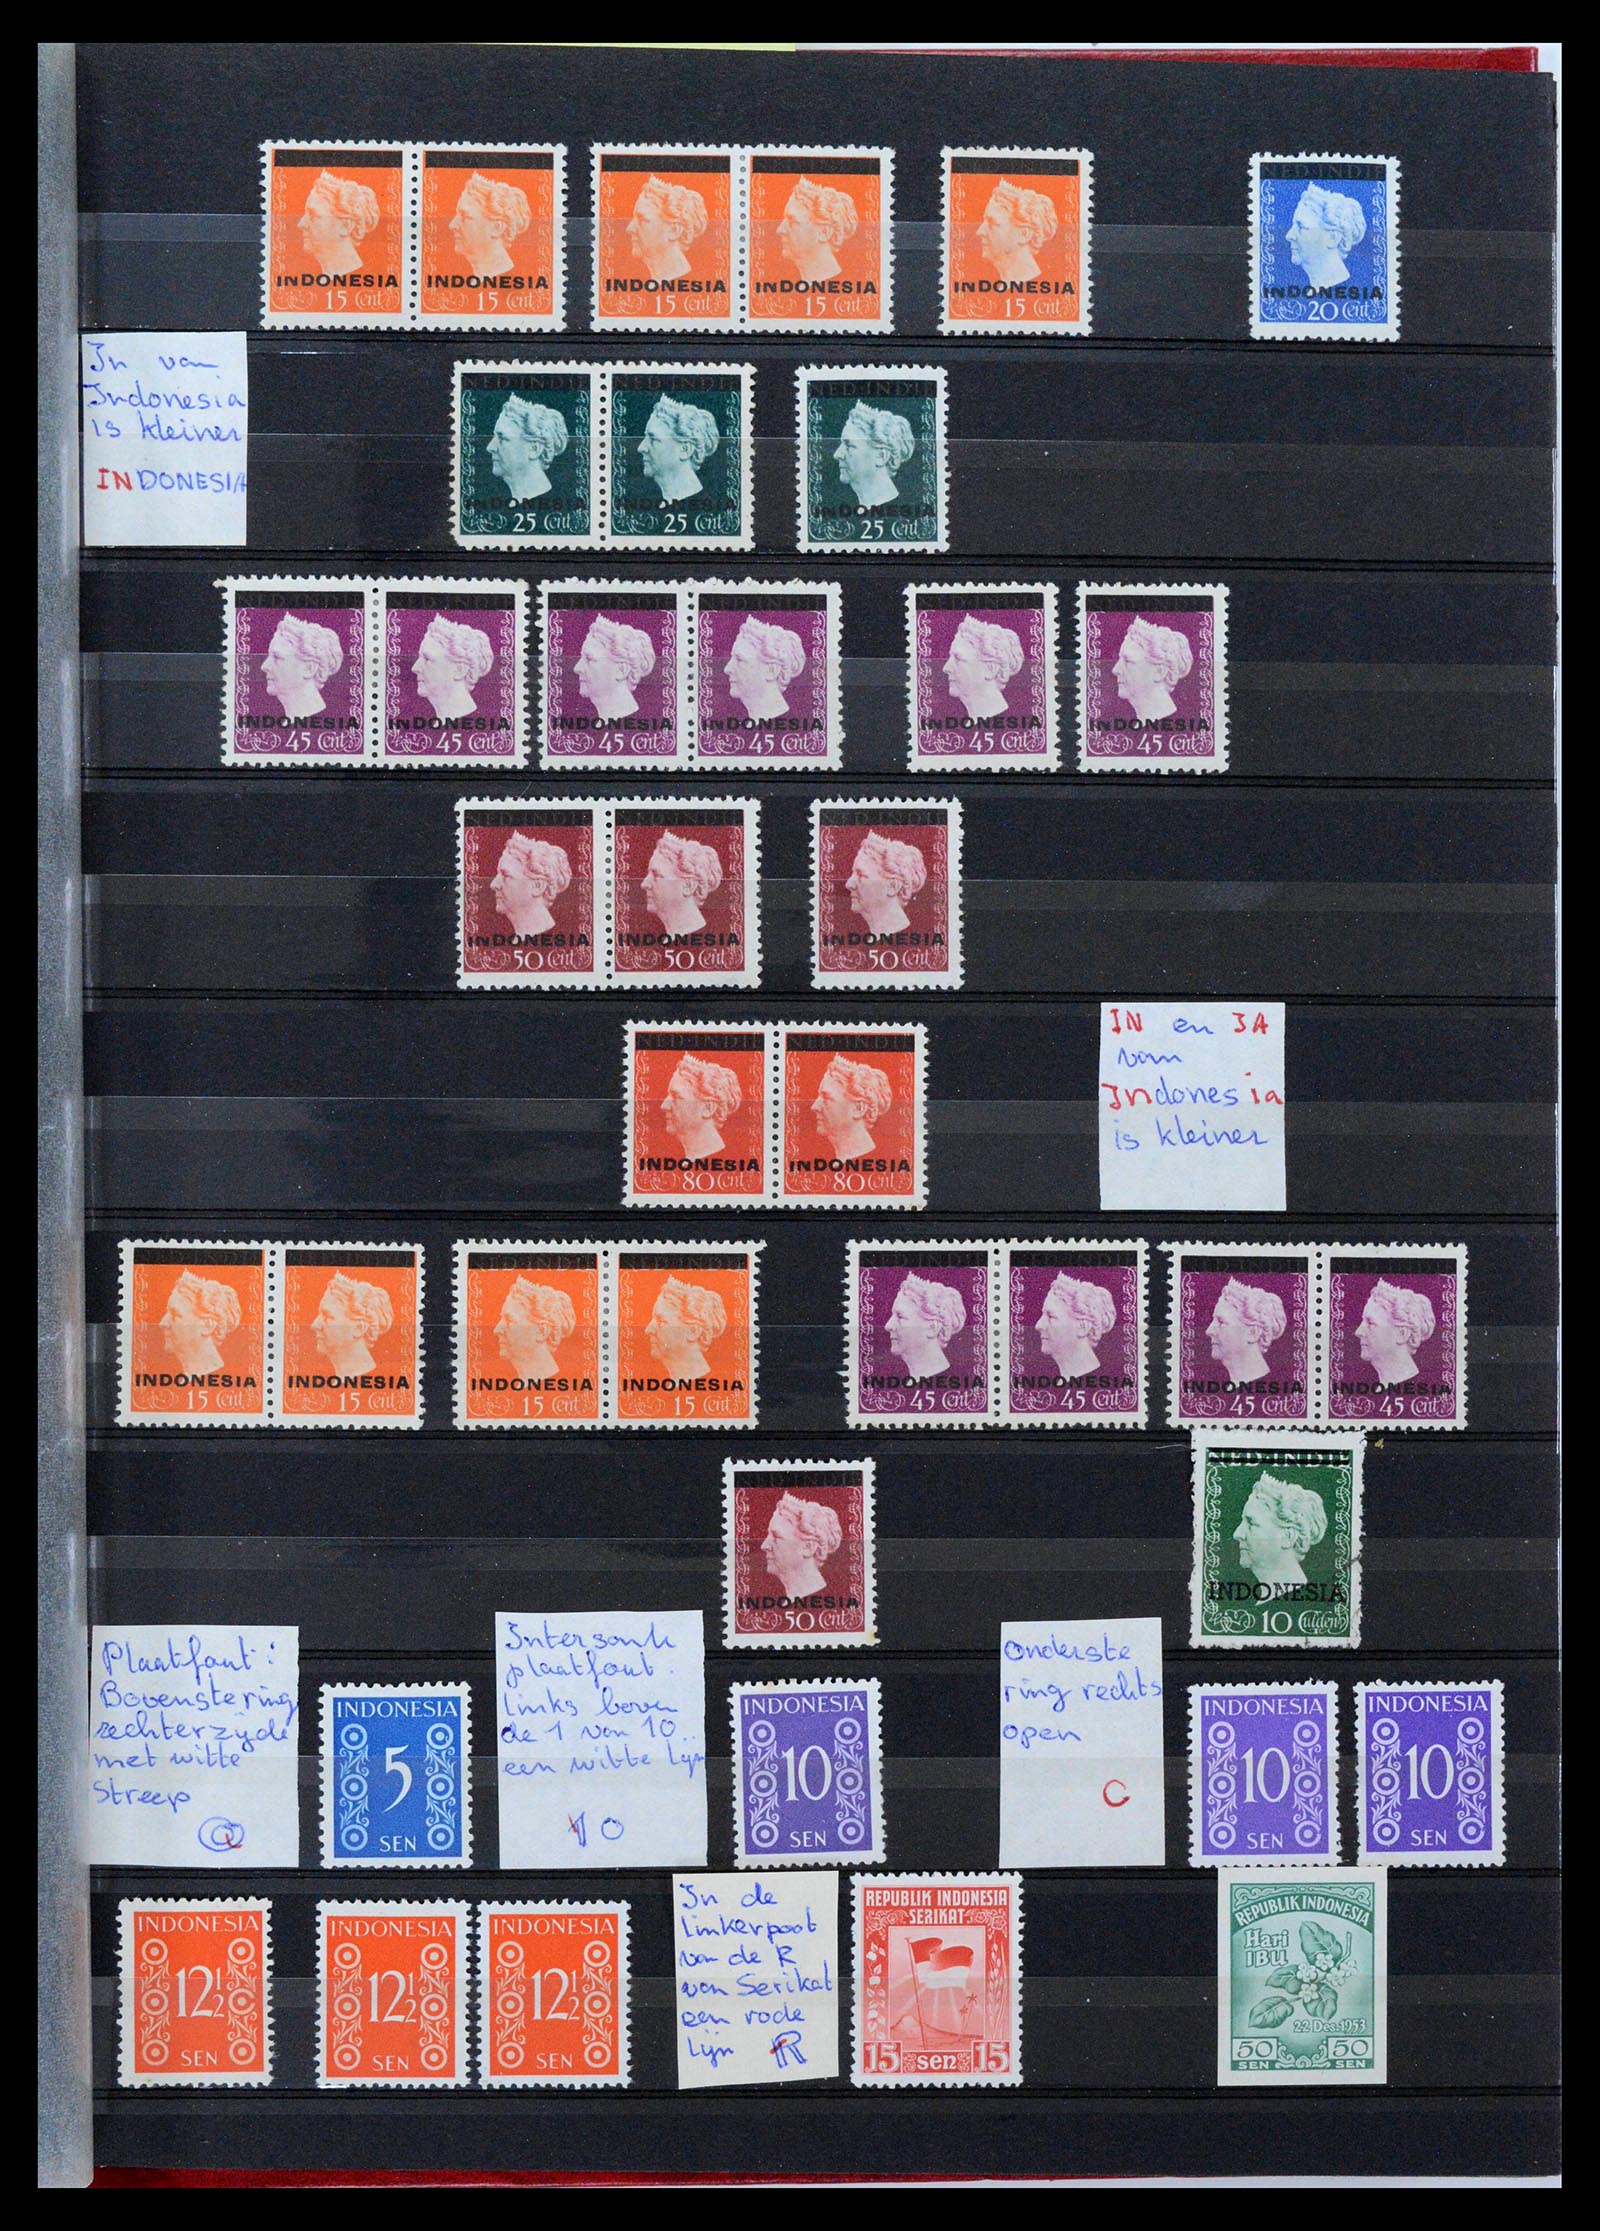 39422 0001 - Stamp collection 39422 Indonesia varieties 1945-1970.